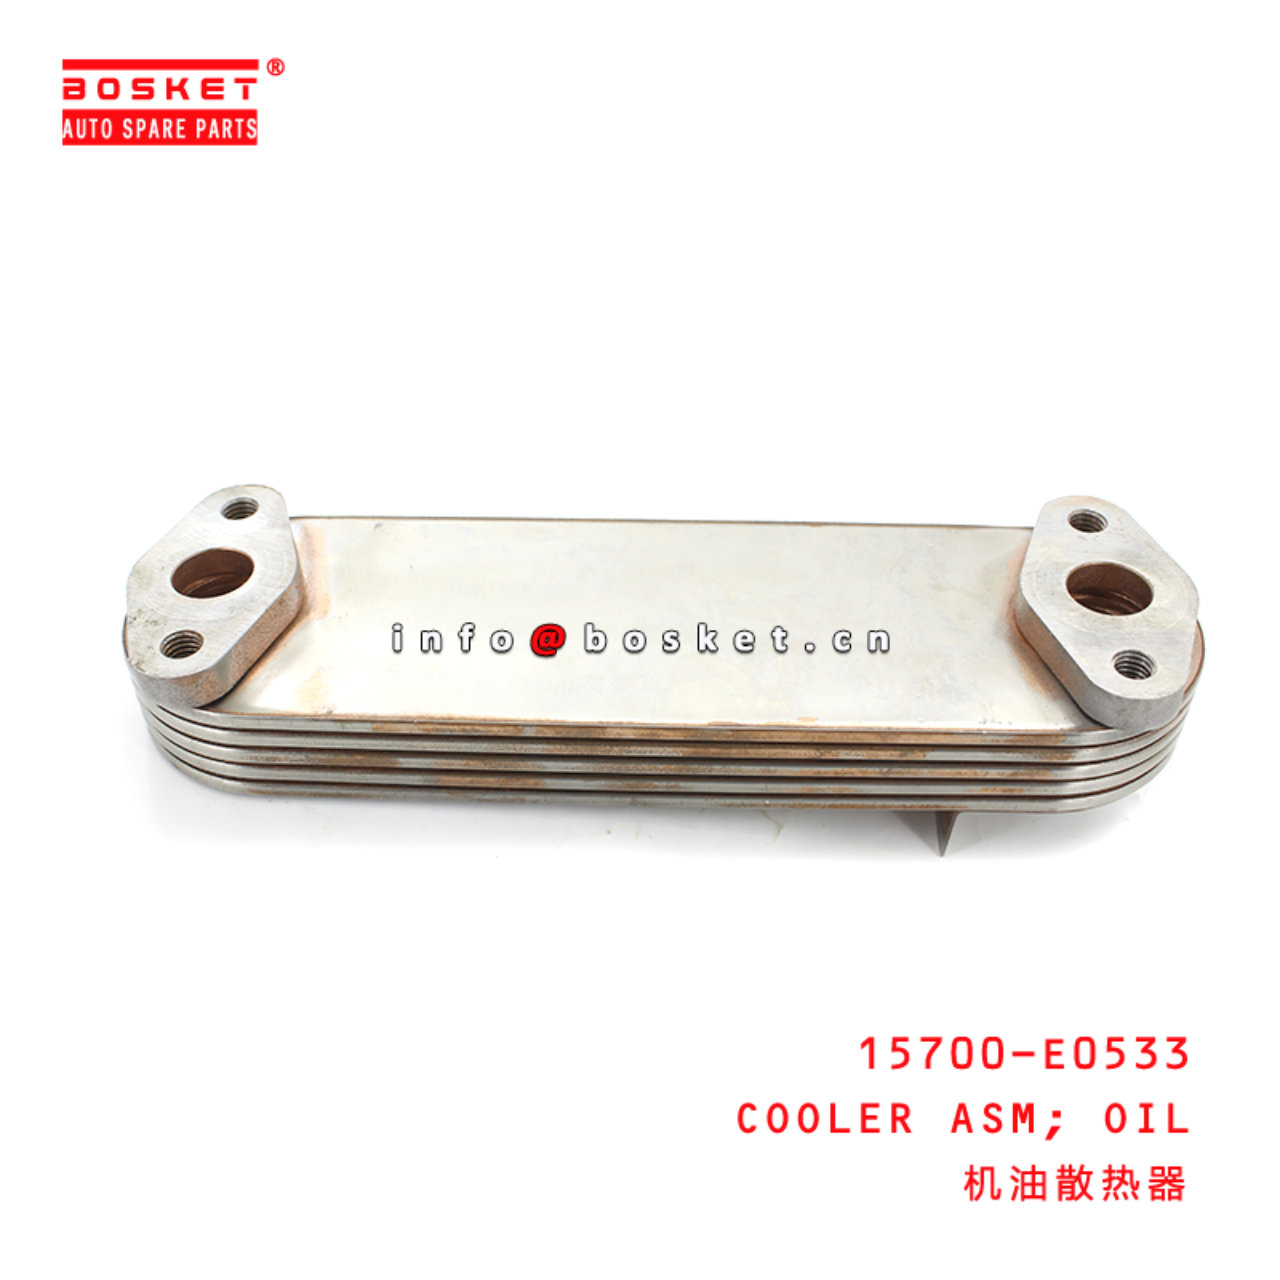 15700-E0533 Oil Cooler Assembly Suitable for ISUZU HINO J05E